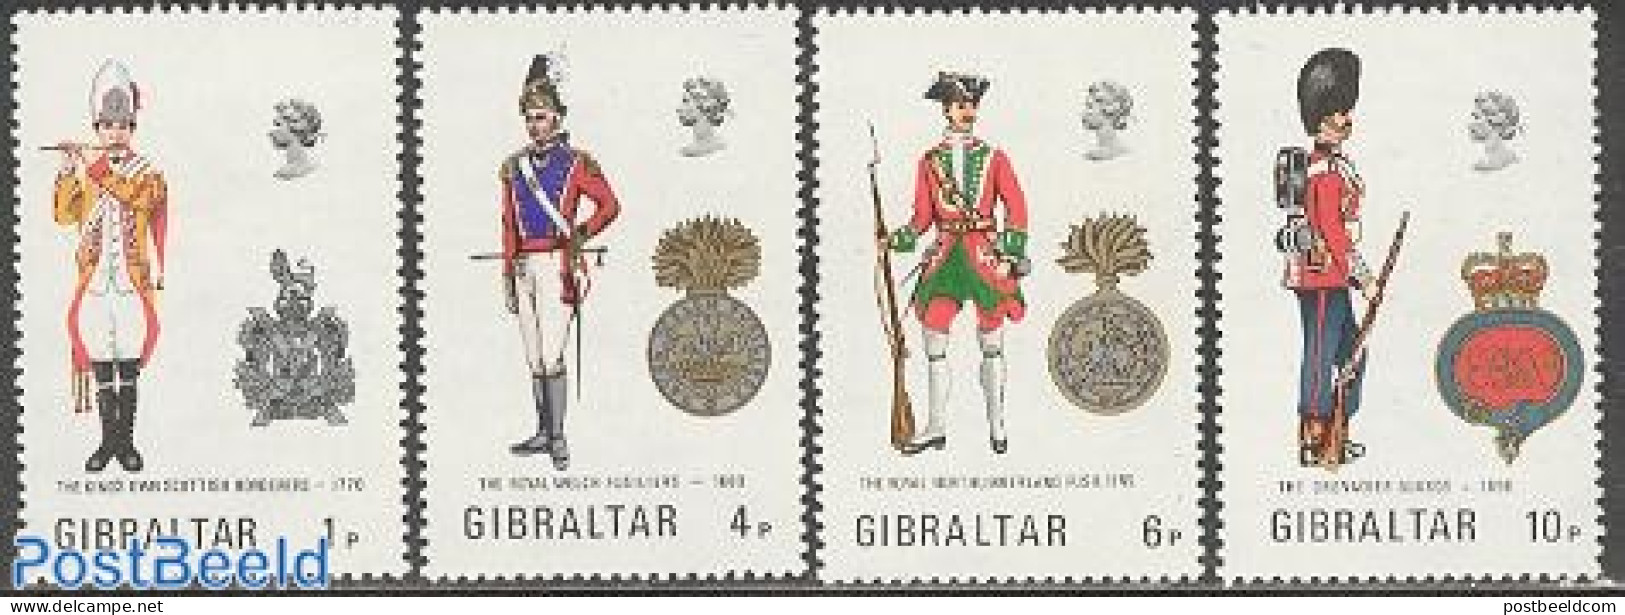 Gibraltar 1973 Uniforms 4v, Mint NH, History - Various - Coat Of Arms - Uniforms - Kostüme